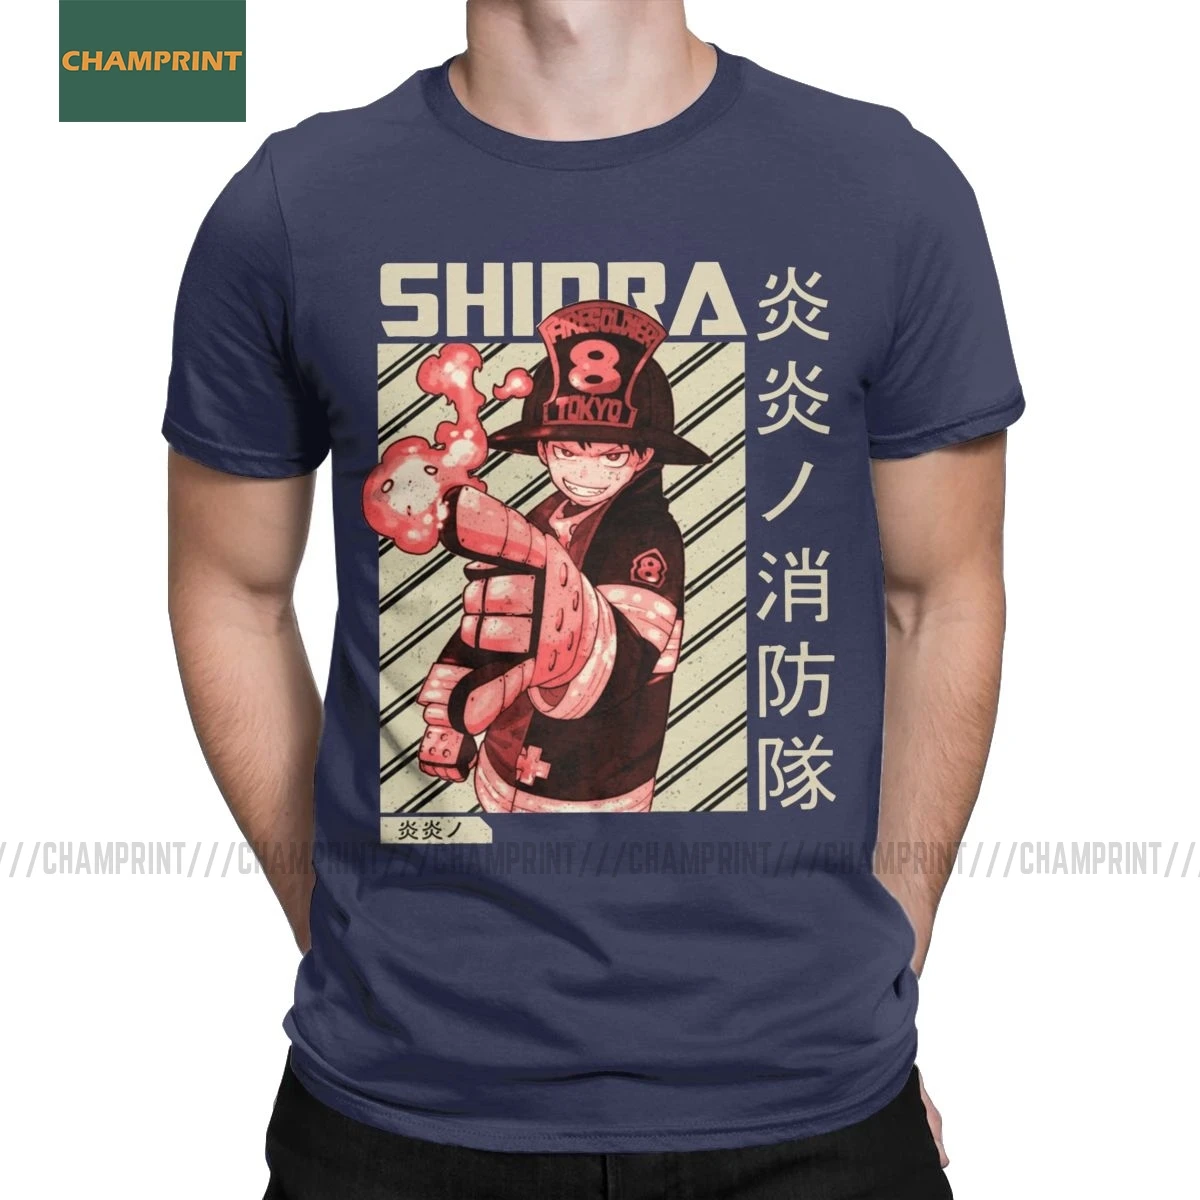 Trendy Anime Shirts Trendy Anime Gifts Inspired Shinra Shirt Enen no Shouboutai Shirts Otaku Anime Gifts Kusakabe Shirts